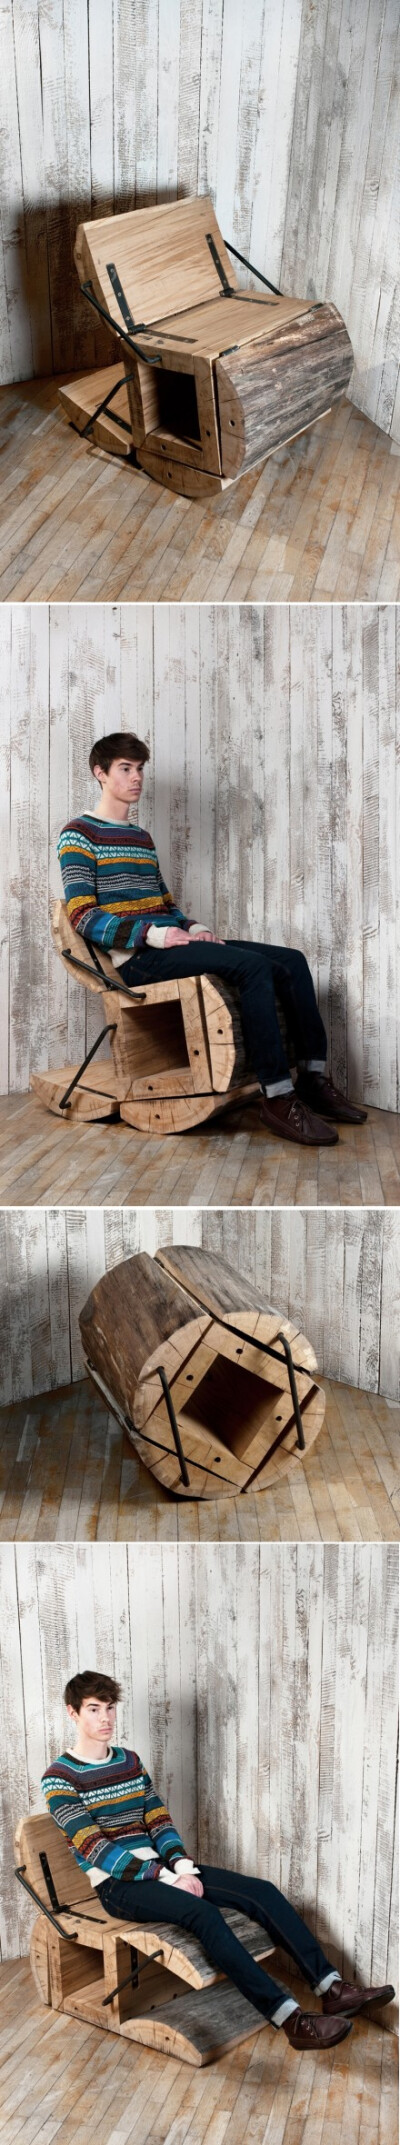 用原木制作的椅子，名为&#39;waste-less log chair&#39; ，可以翻译成“不浪费椅子”。来自匈牙利Architecture uncomfortable workshop。